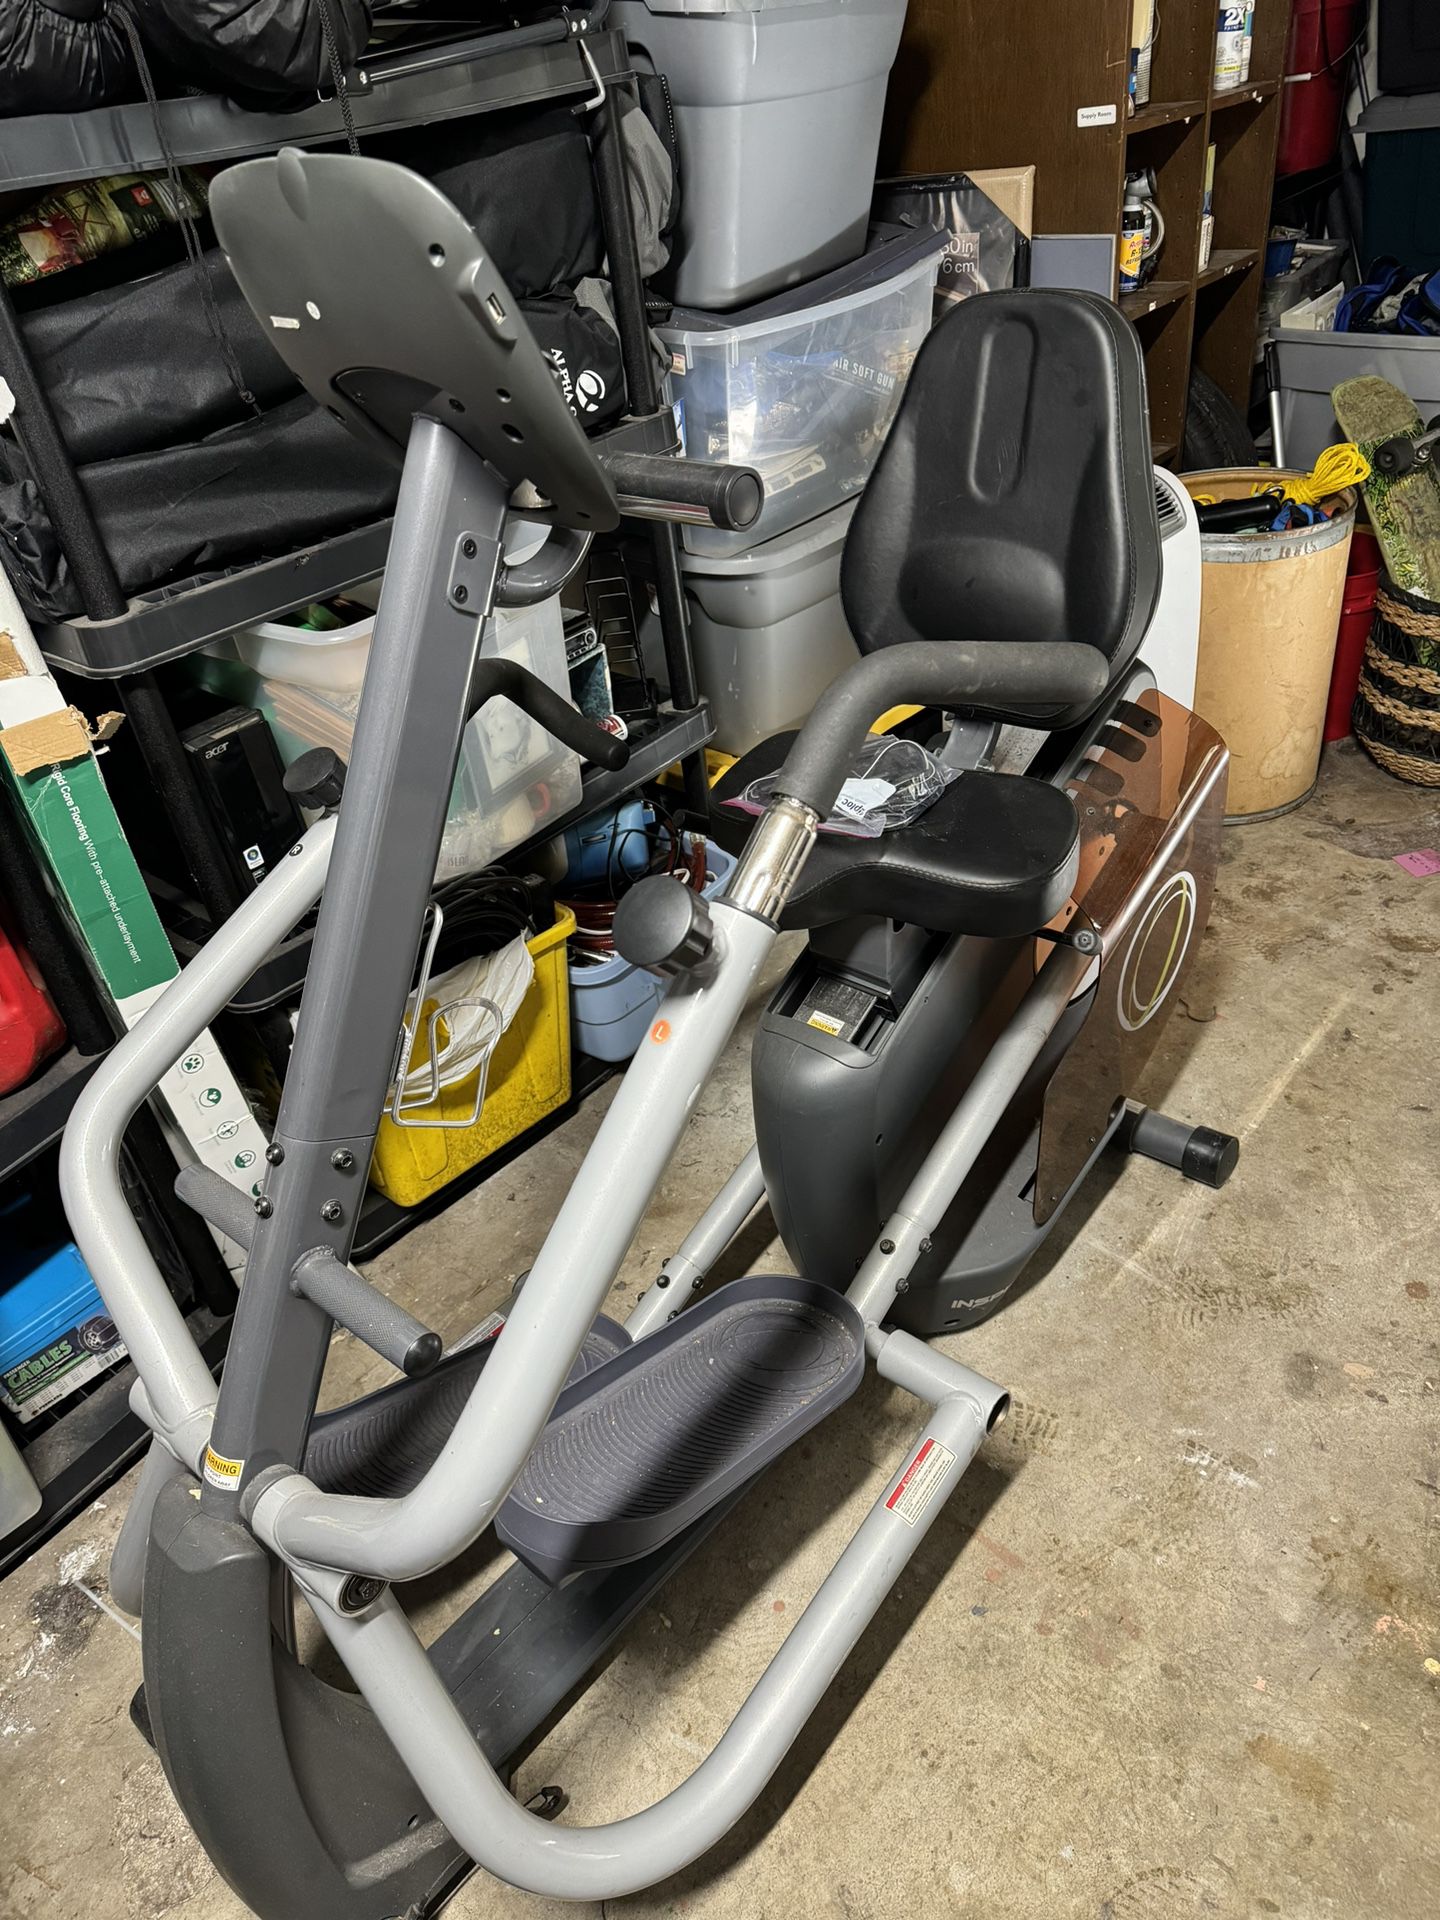 Inspire Cardio Strider- Seated Elliptical Workout Machine